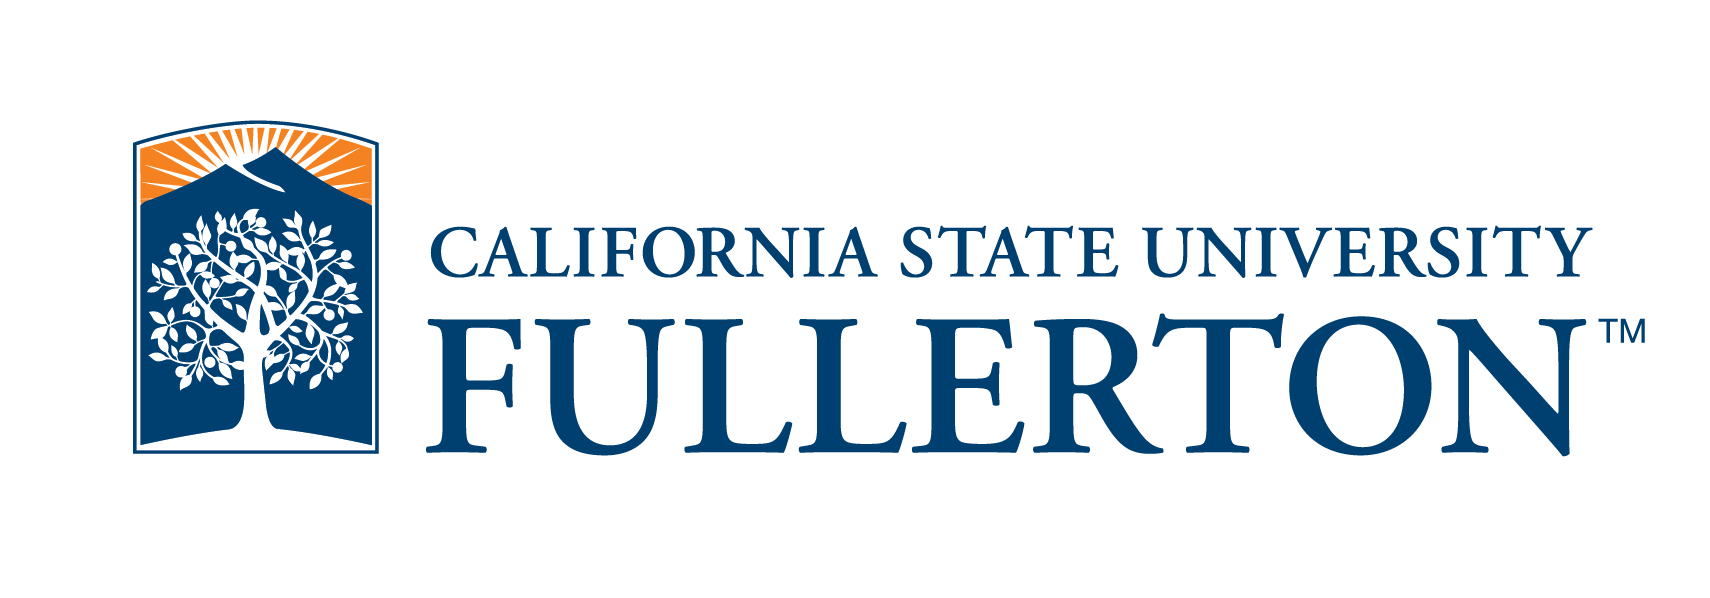 California State University - Fullerton logo